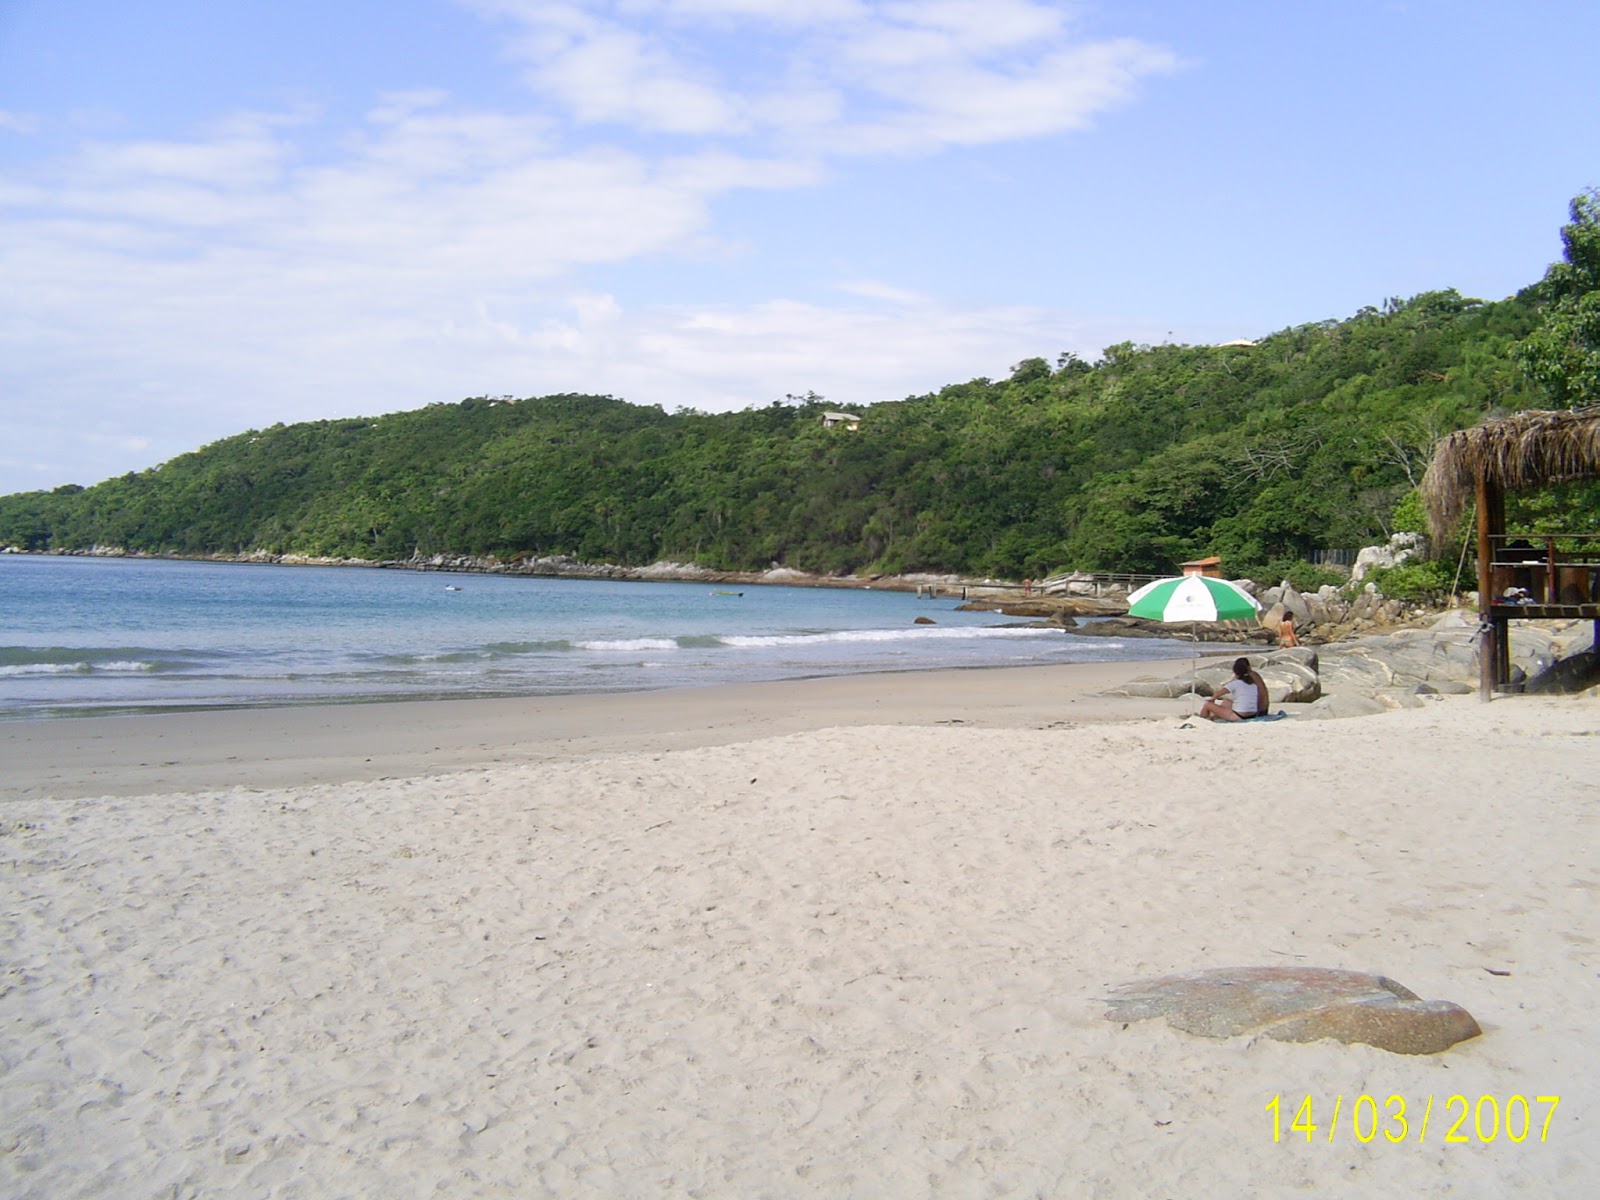 Foto af Praia do Estaleiro vildt område